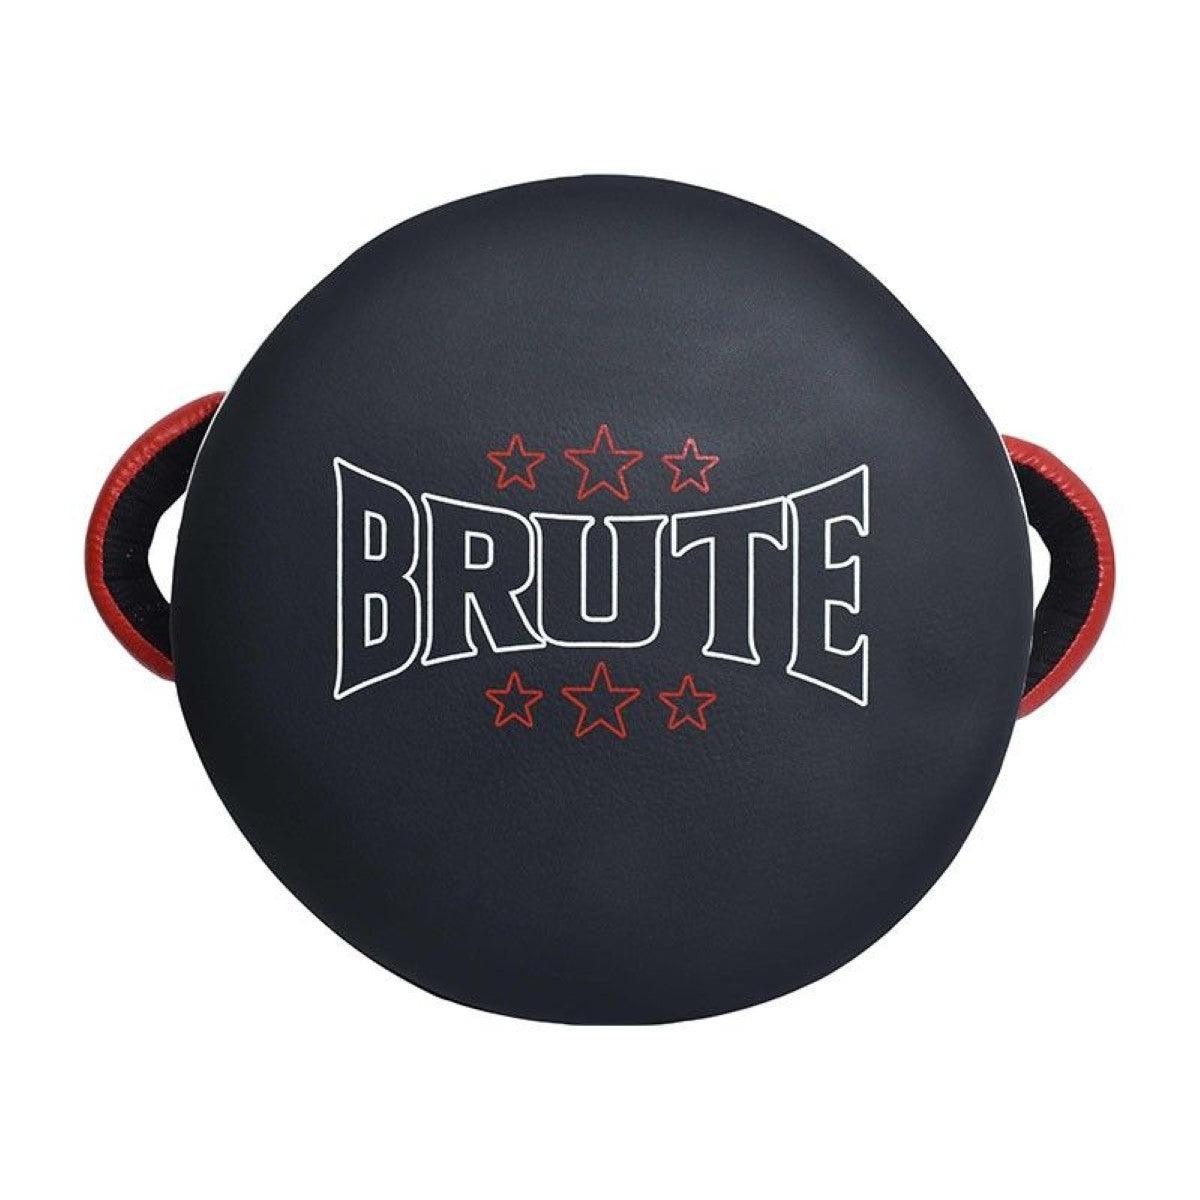 Brute Round Kick Pad 42cm